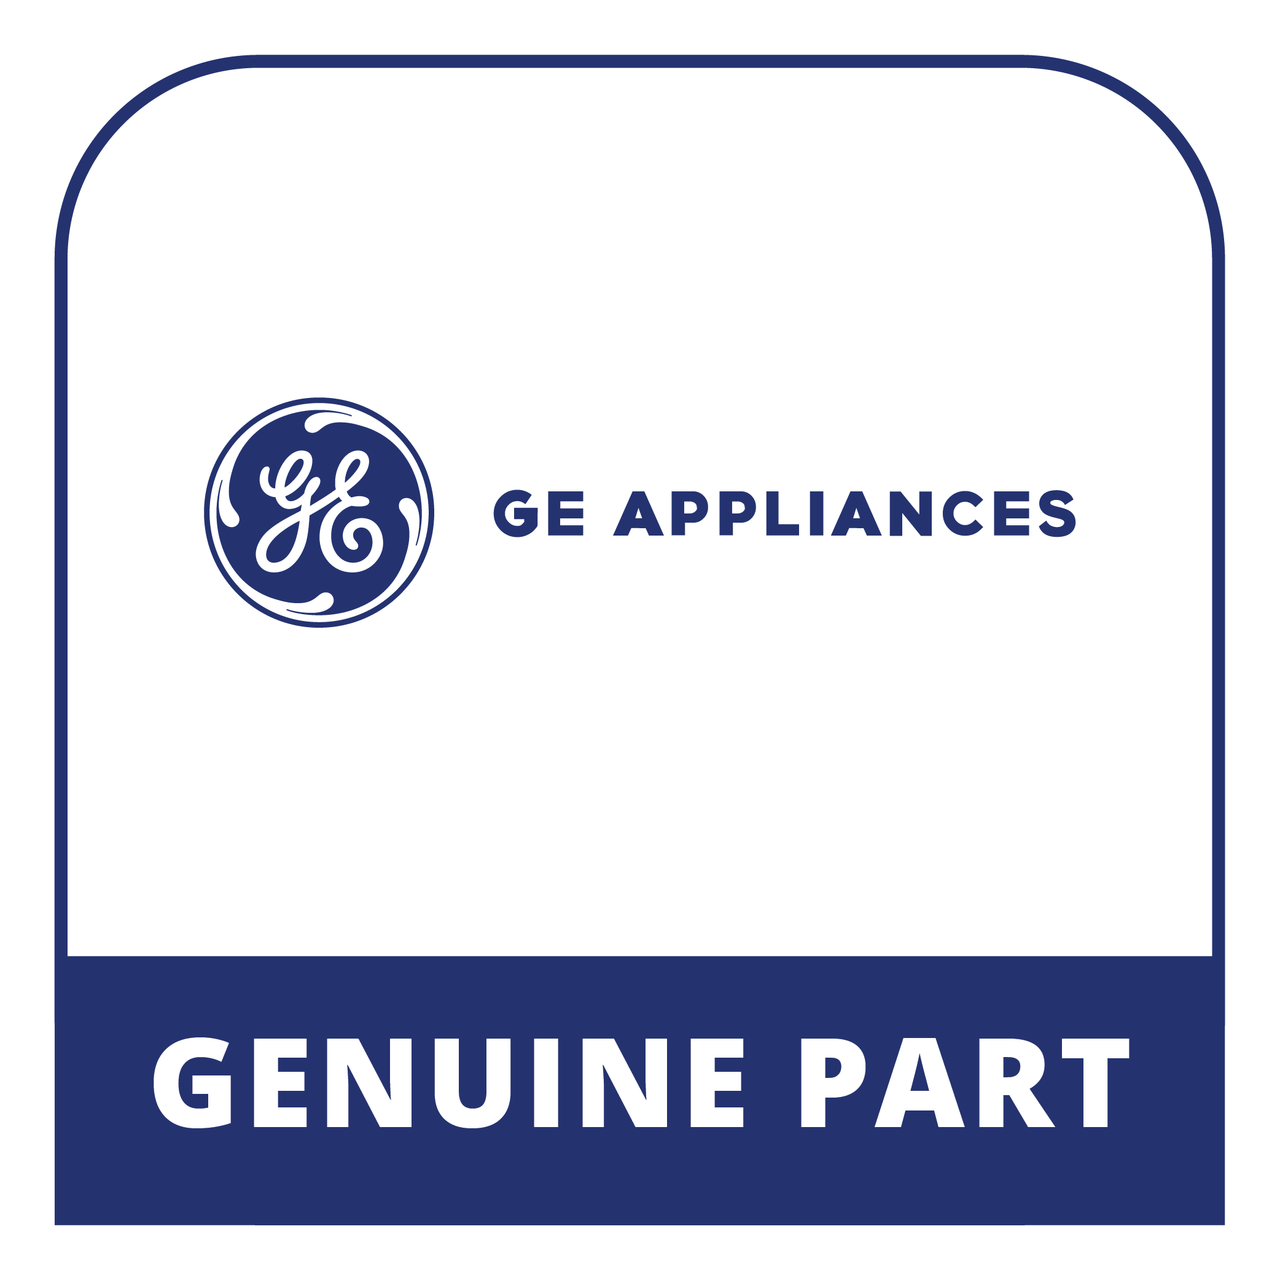 GE Appliances WR01X28471 - Refrigerator Door Closer - Left - Genuine Part